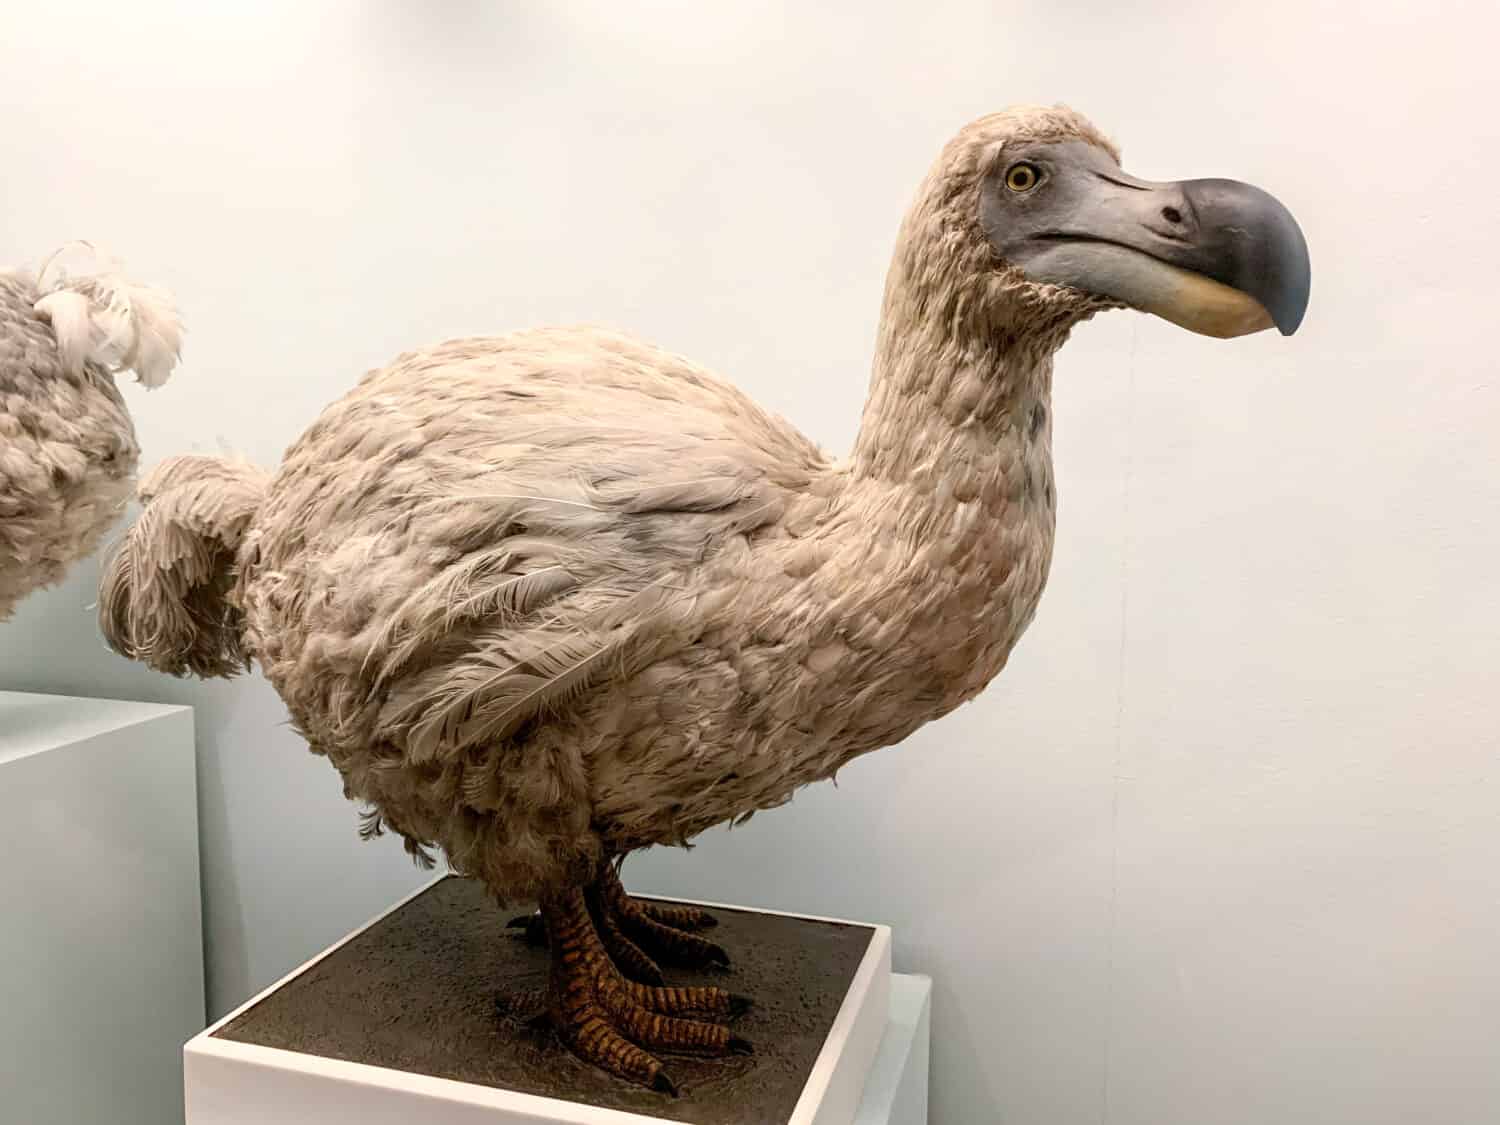 Stuffed dodo bird, an extinct flightless bird from Mauritius, east of Madagascar in the Indian Ocean.